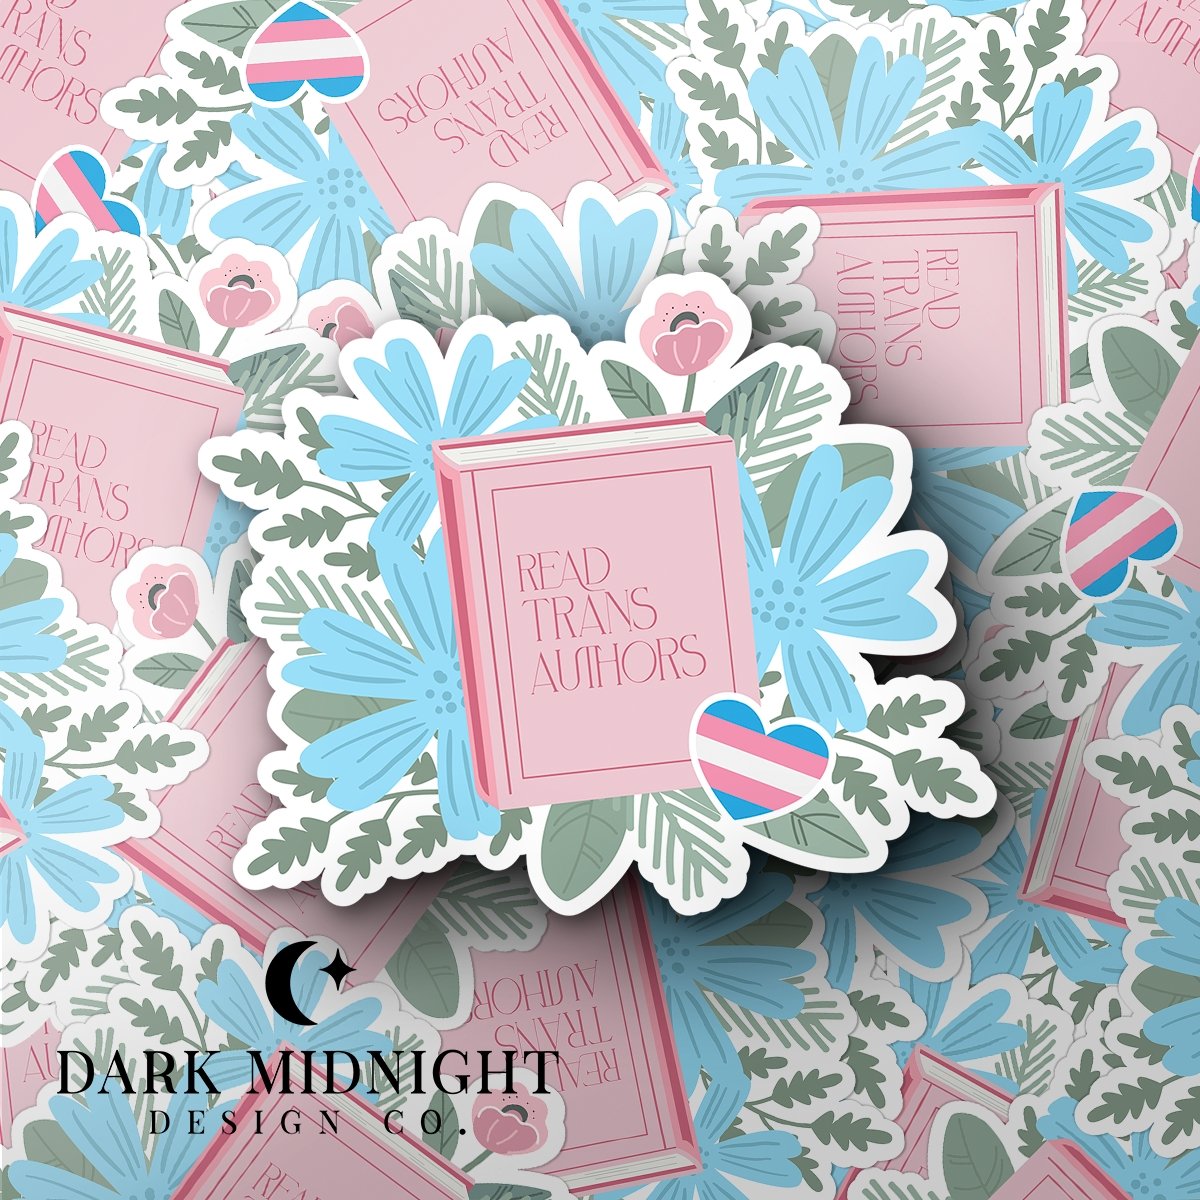 Read Trans Authors - Floral Book Sticker - Dark Midnight Design Co